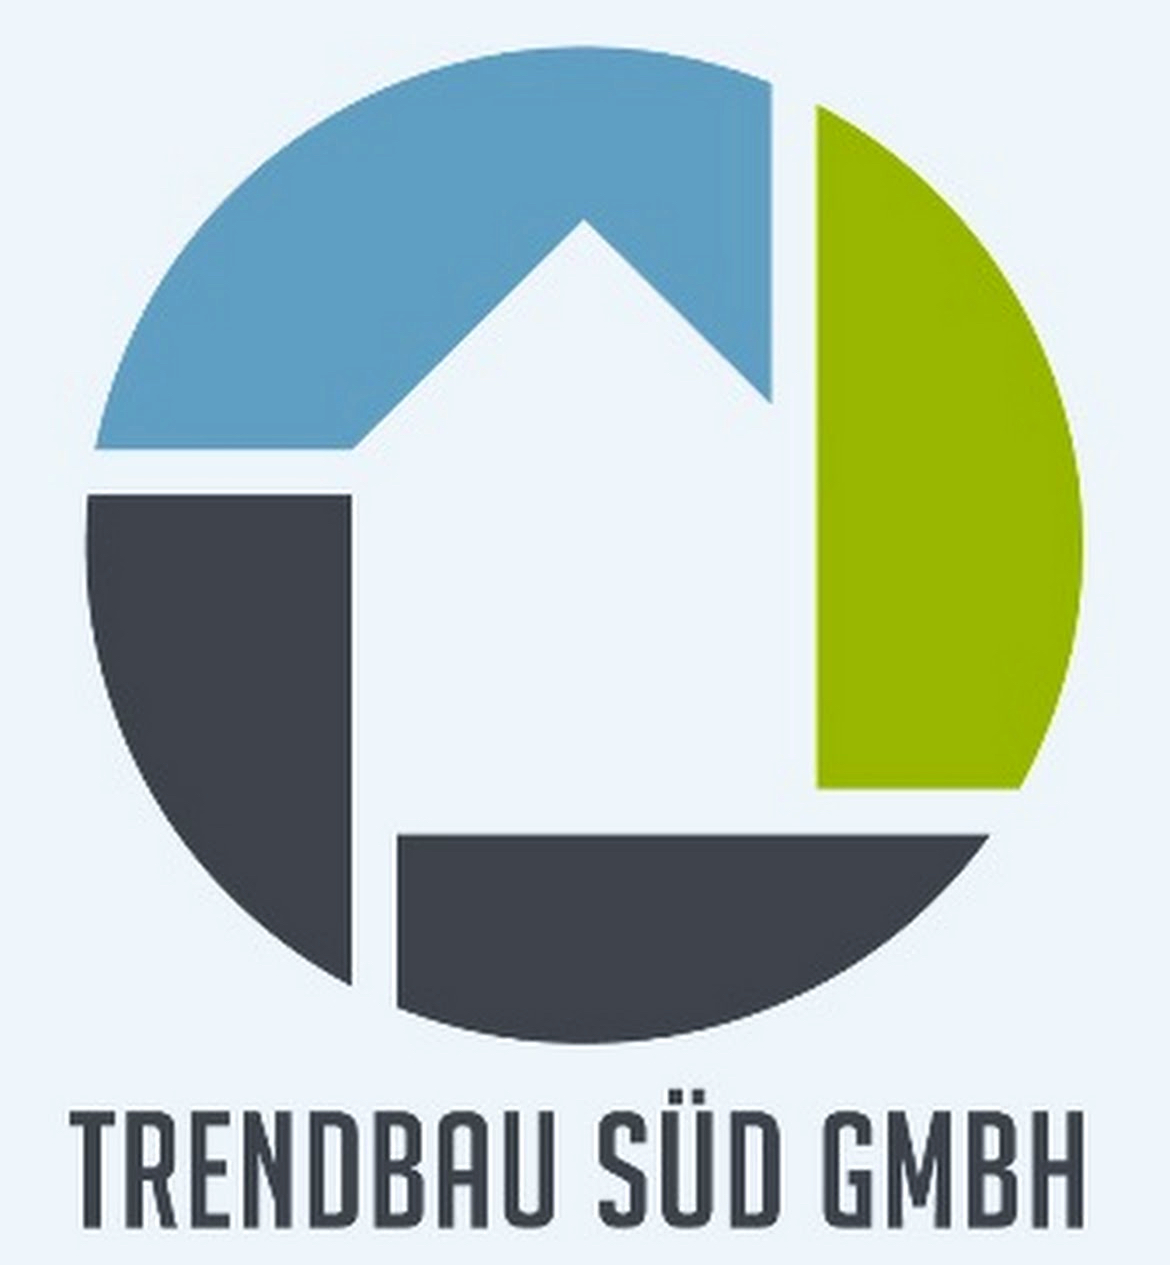 Trendbau Süd Gmbh